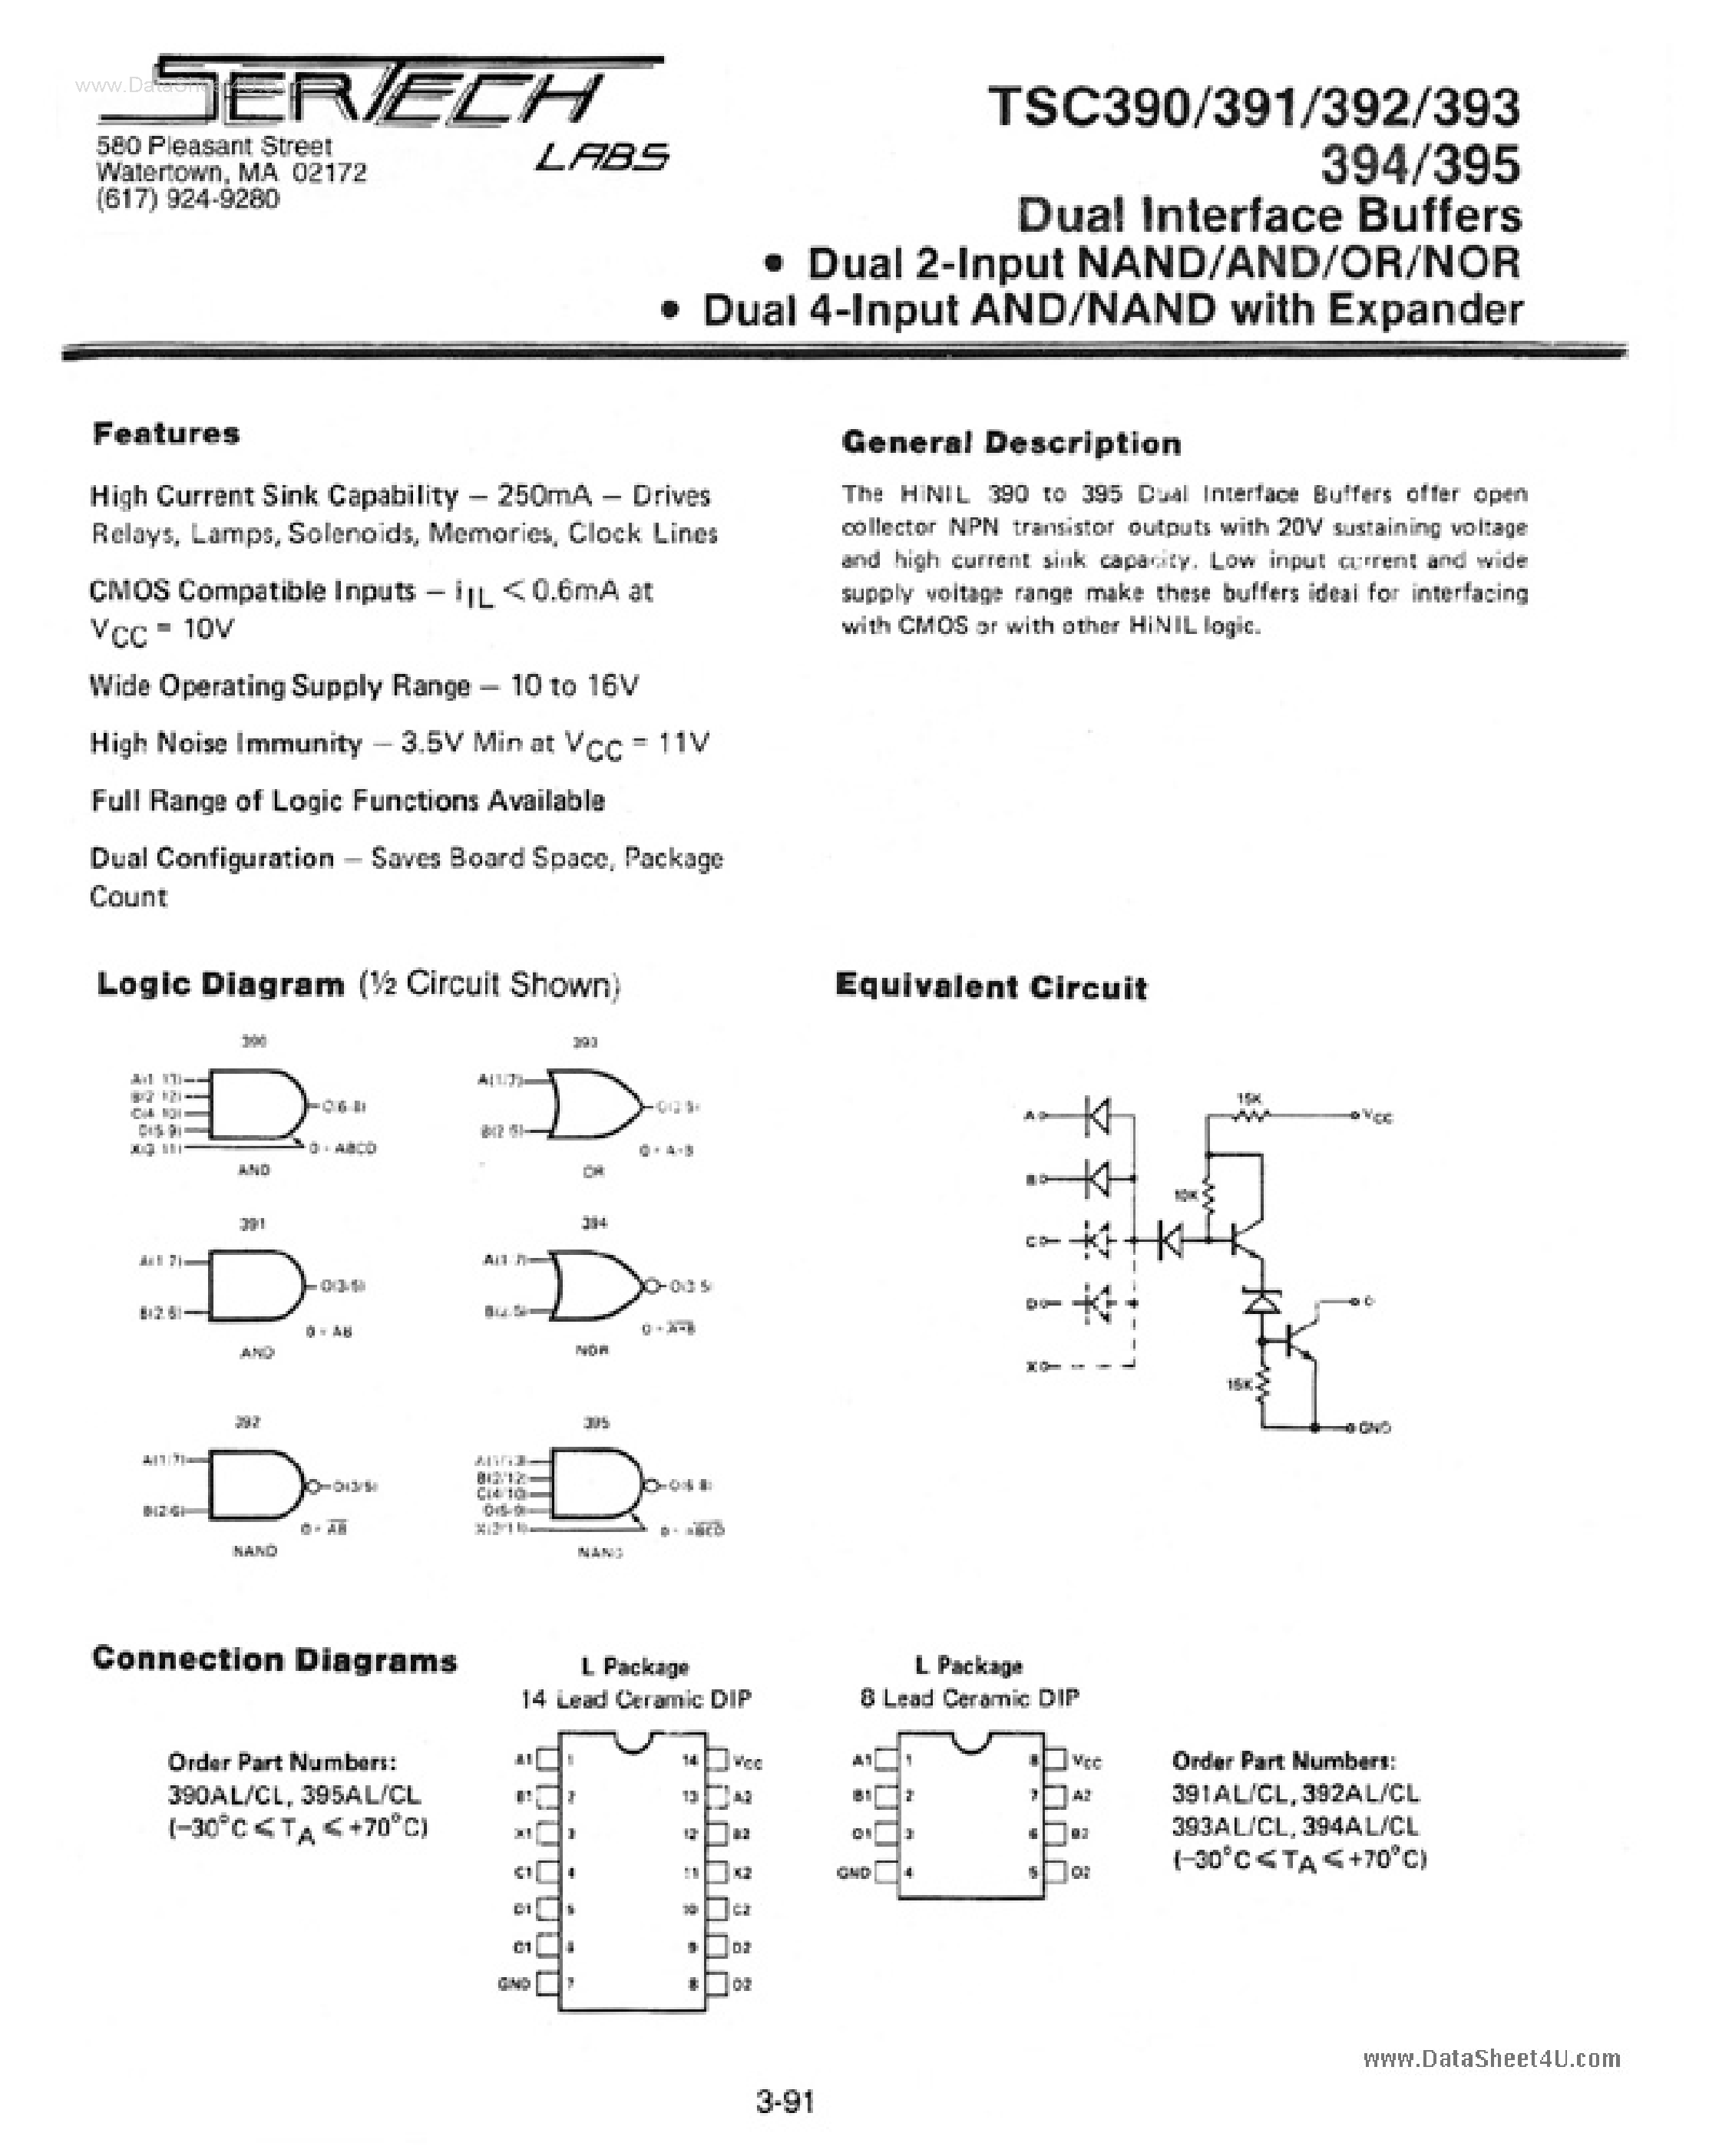 Datasheet TC390 - (TC390 - TC395) DUAL INTERFACE BUFFERS / DUAL 2-INPUT NAND/AND/OR/NOR / DUAL 4-INPUT AND/NAND page 1